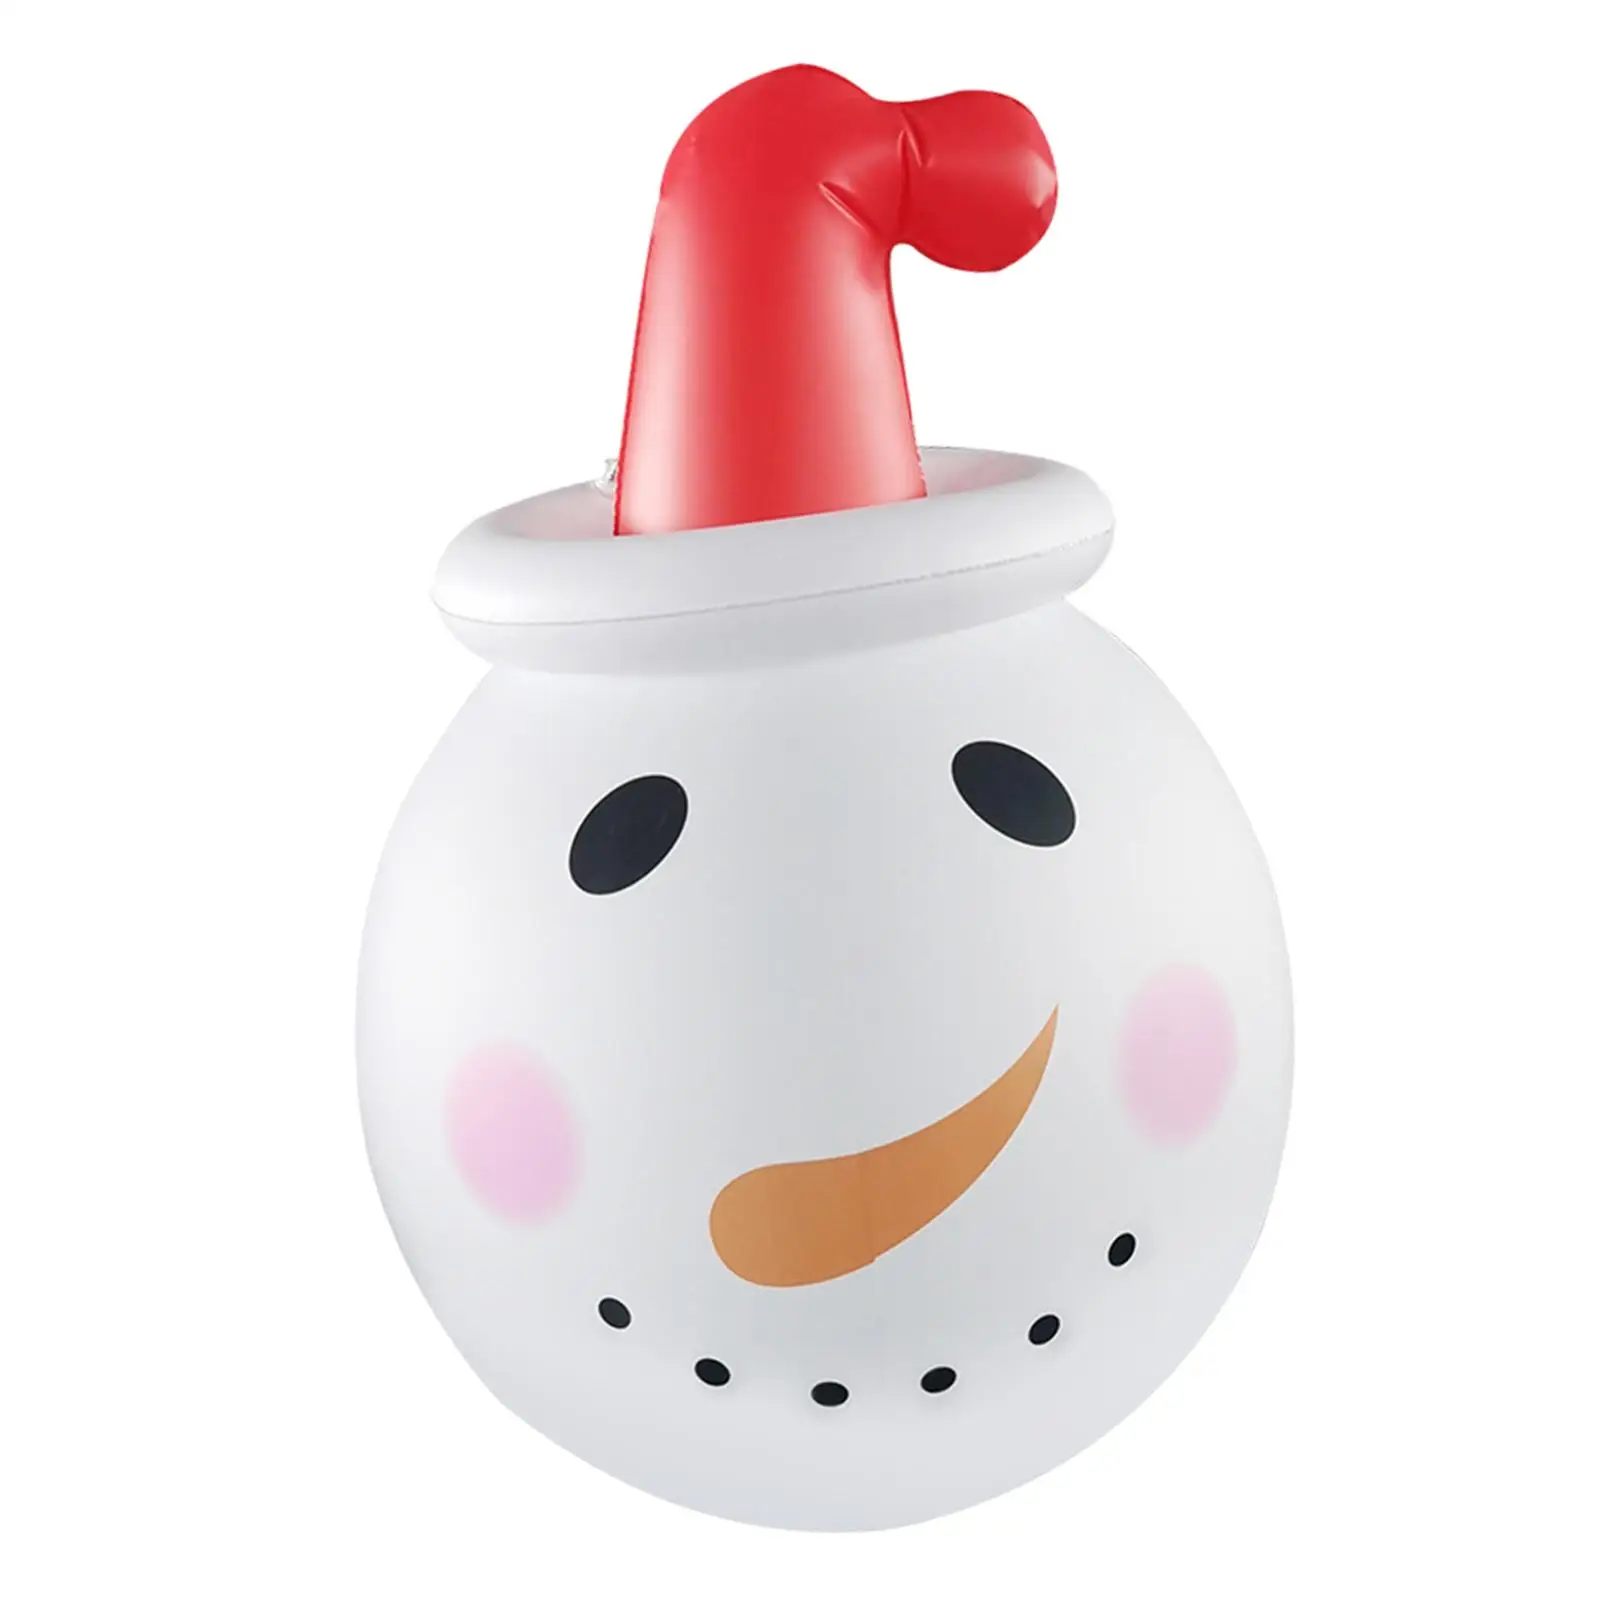 Christmas Inflatable Snowman Ornament Christmas Decoration Adorable Night Lamp